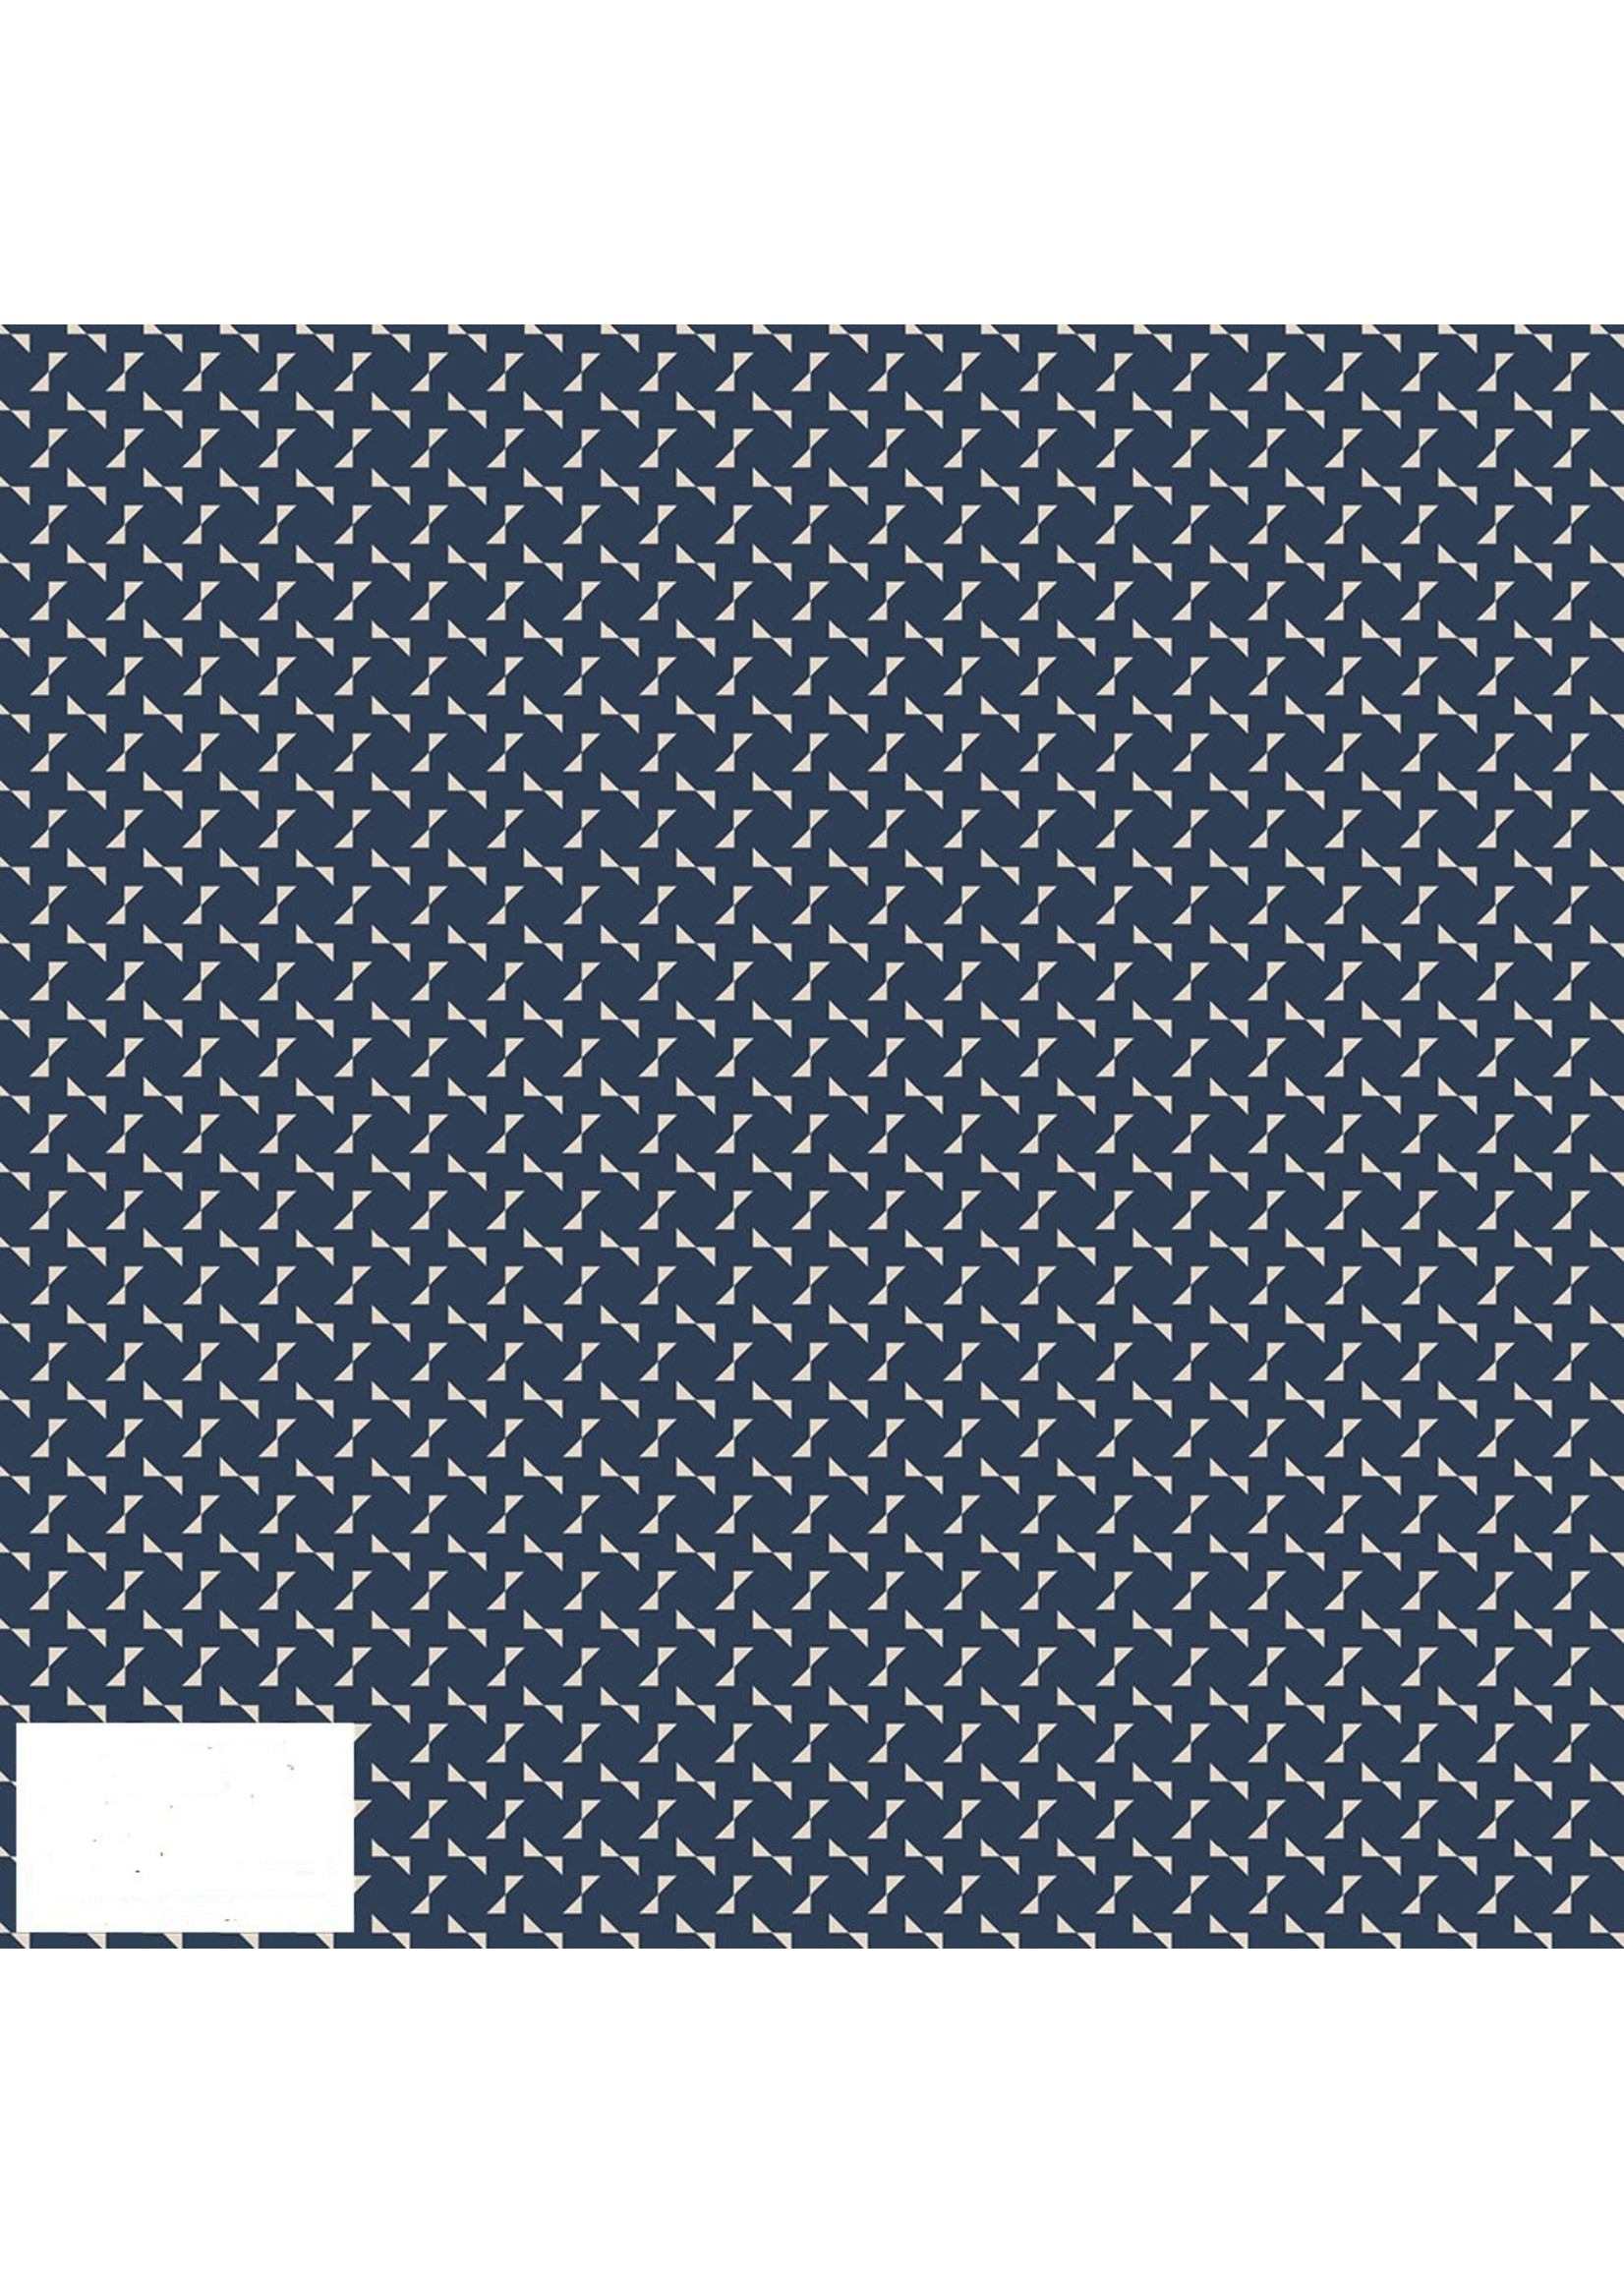 Stof Fabrics Nellies Shirtlings - Bowties - Blue